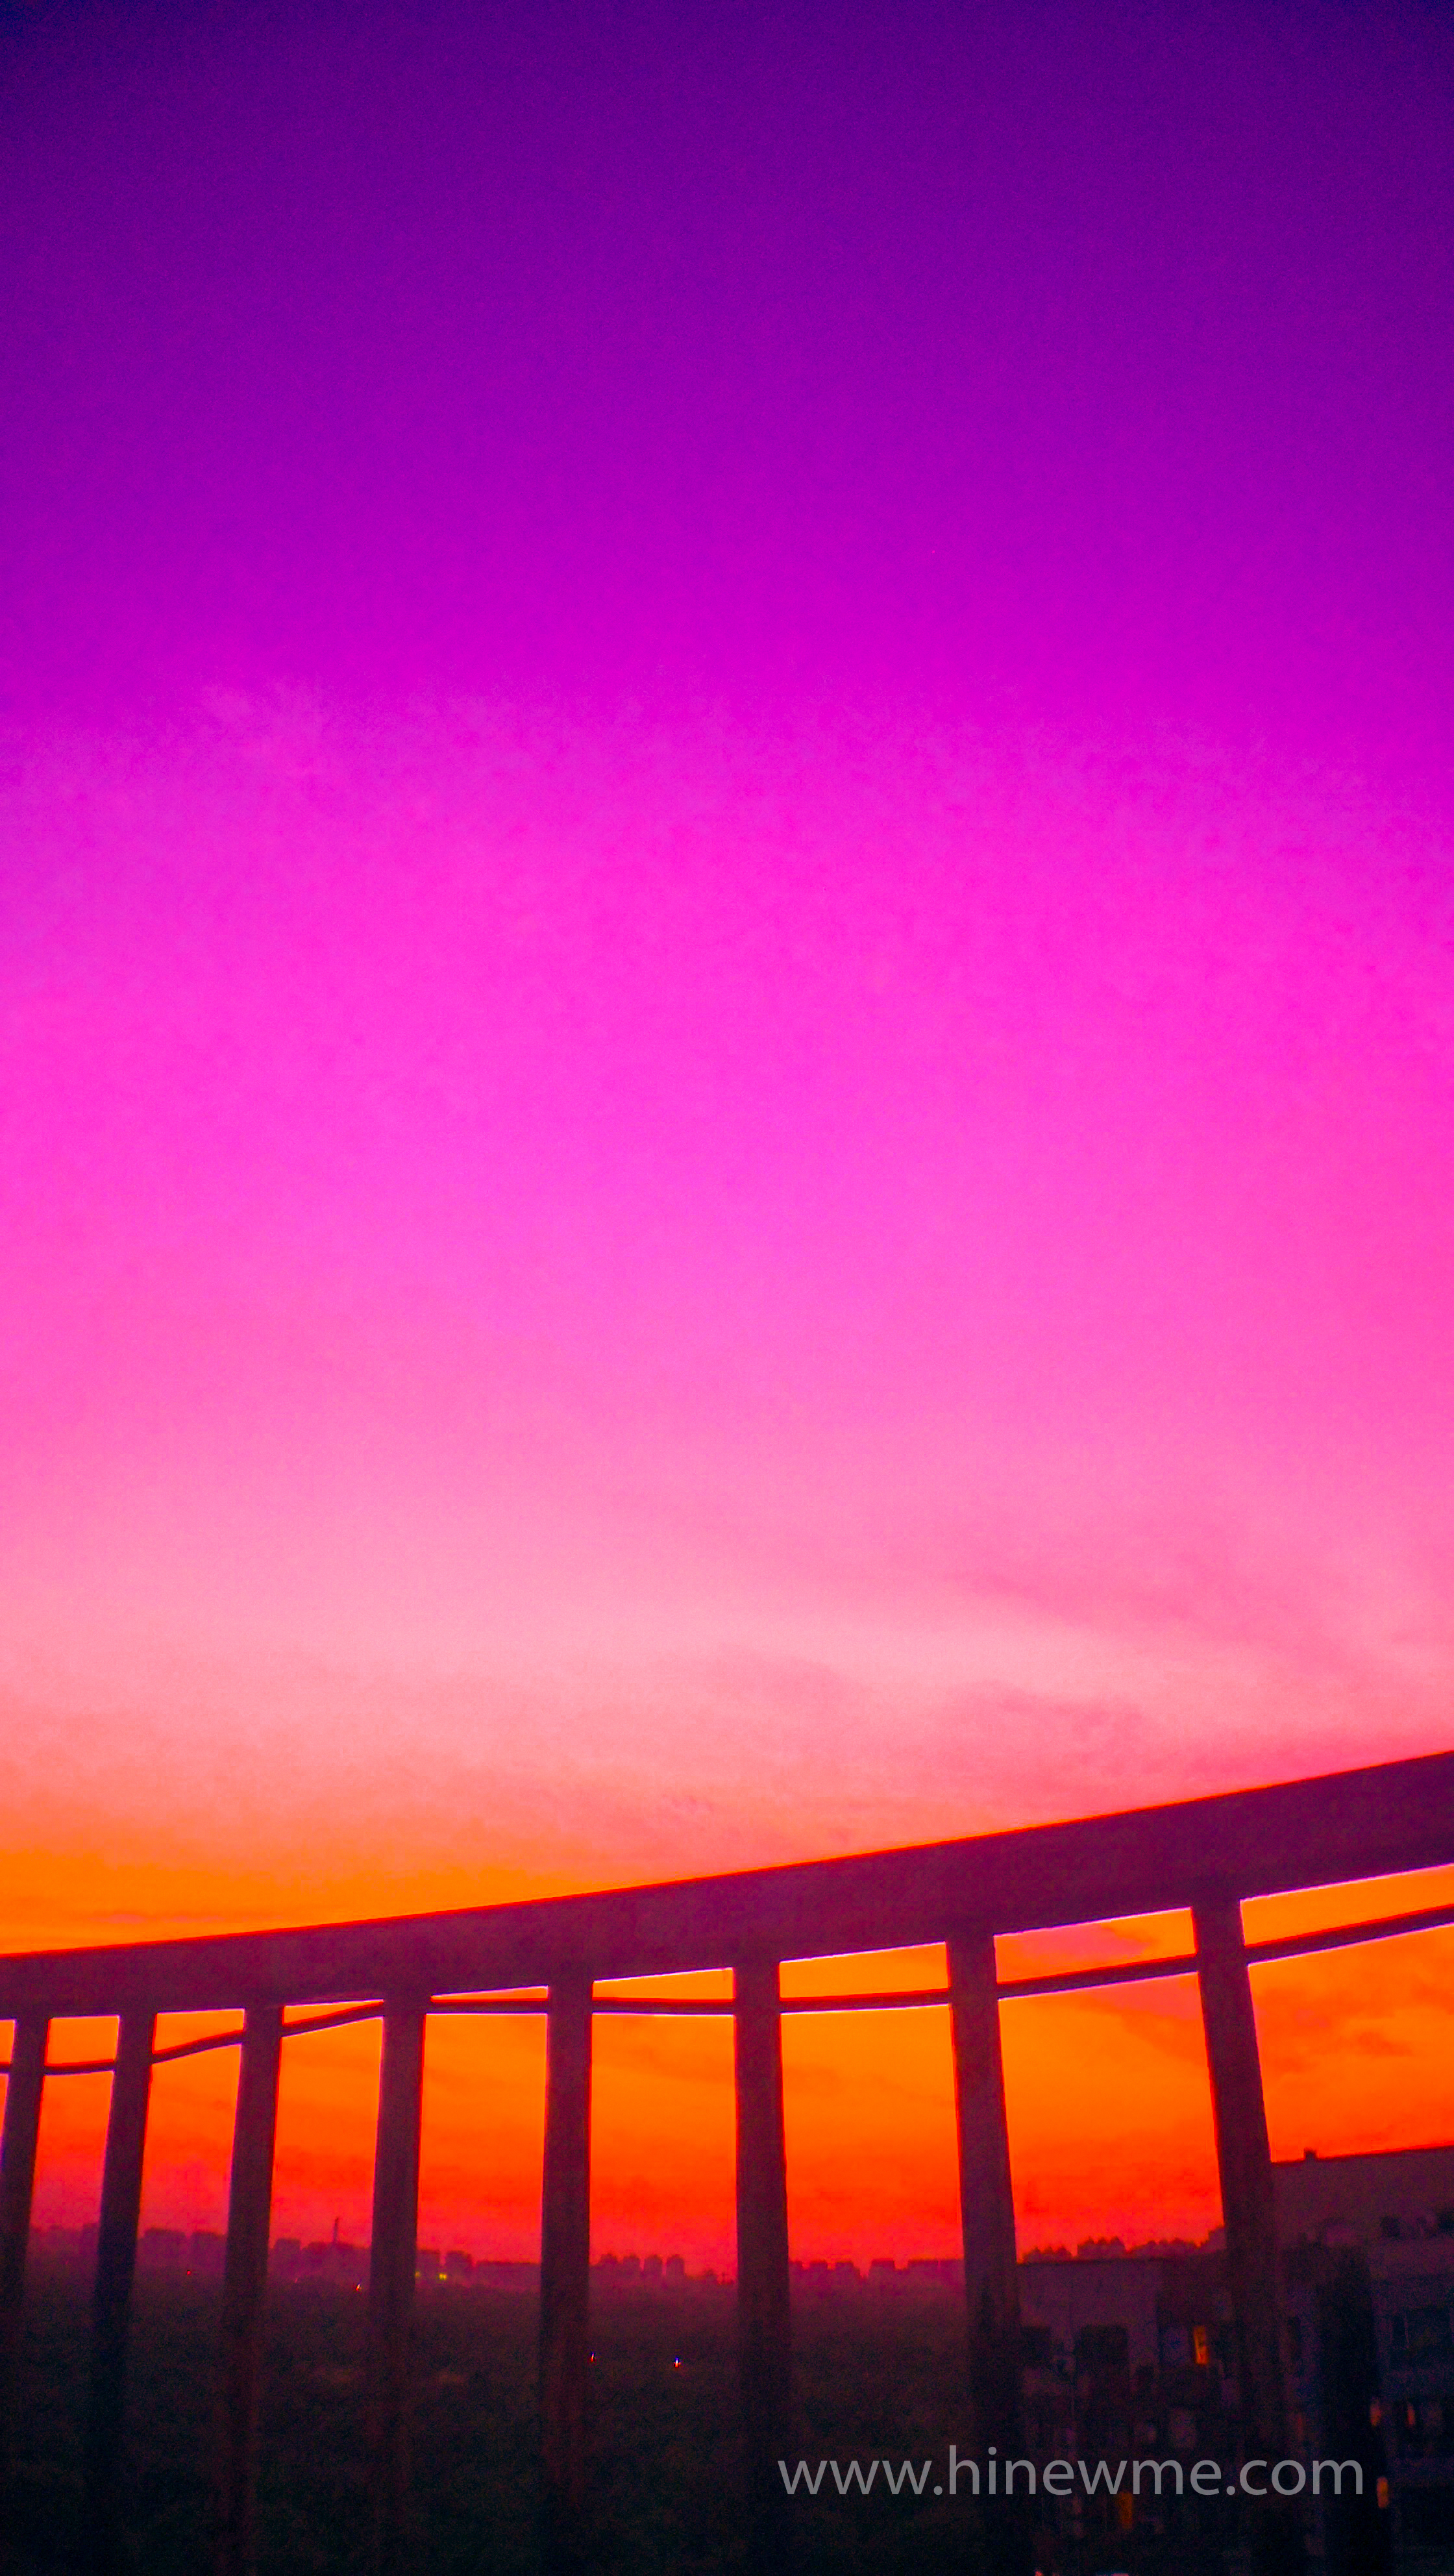 Purple sunset landscape photography pictures